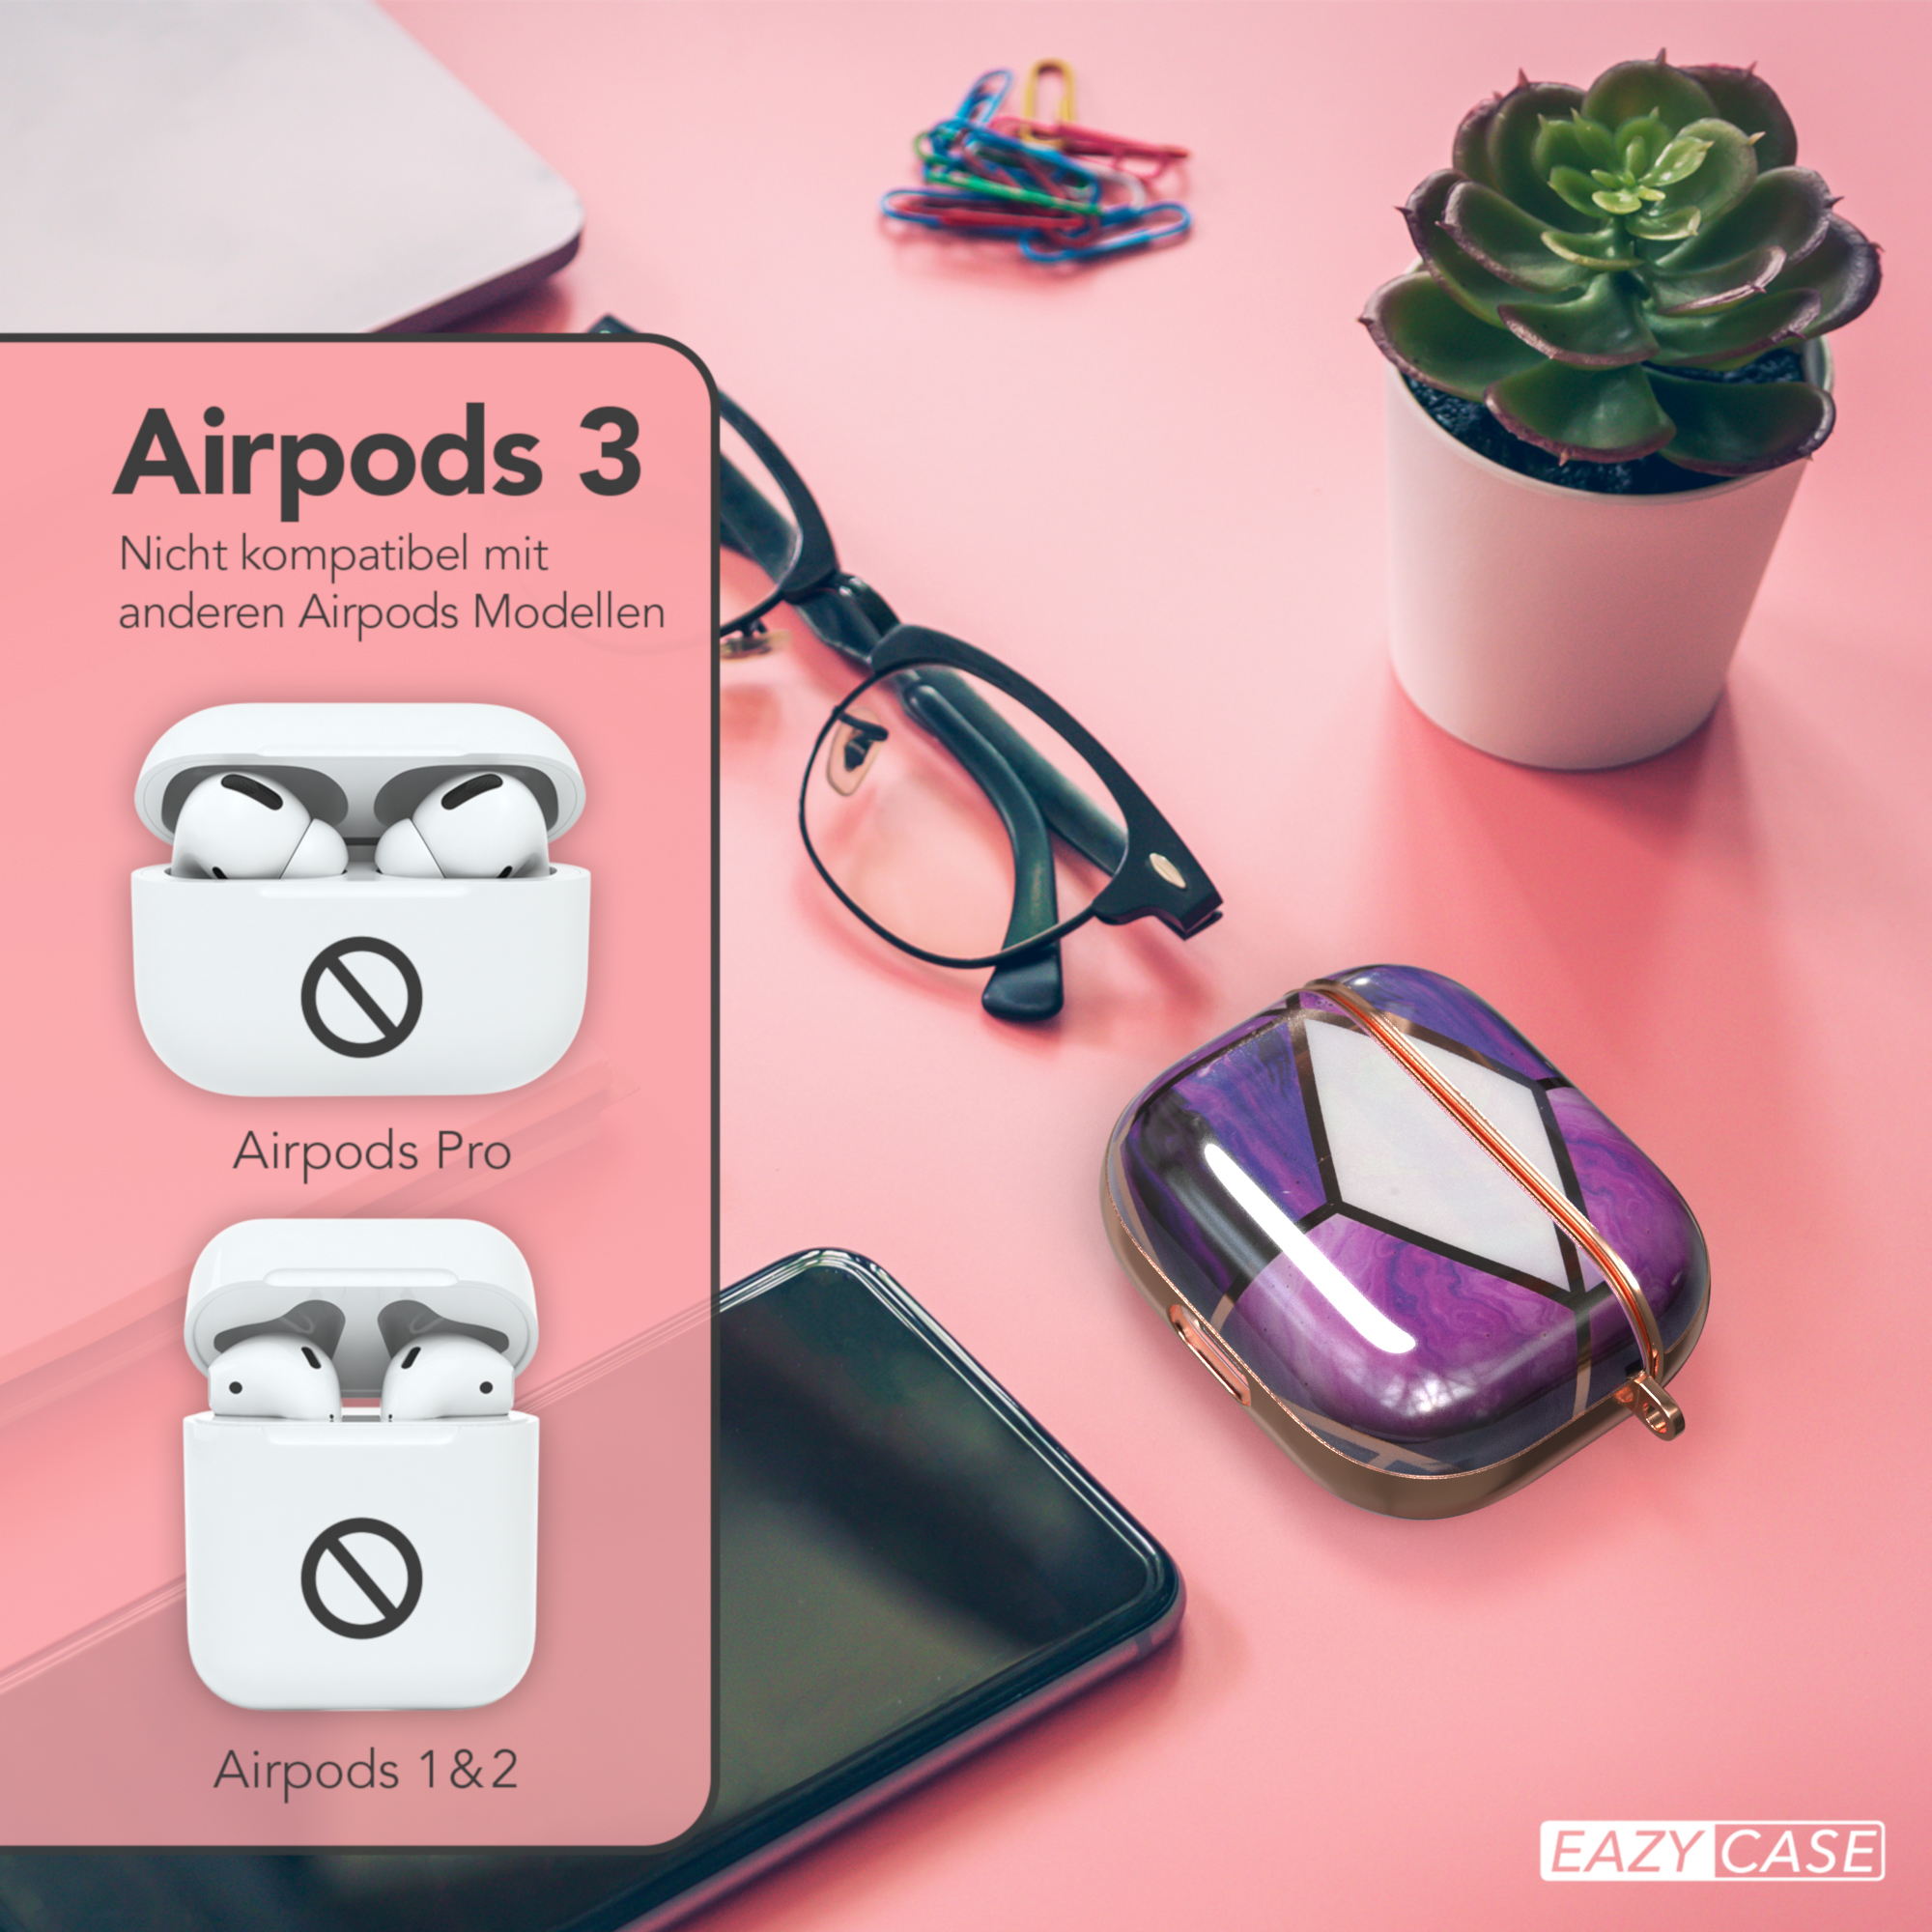 EAZY CASE AirPods für: Sleeve Rosegold Case / Motiv passend Lila Schutzhülle 3 IMD Apple